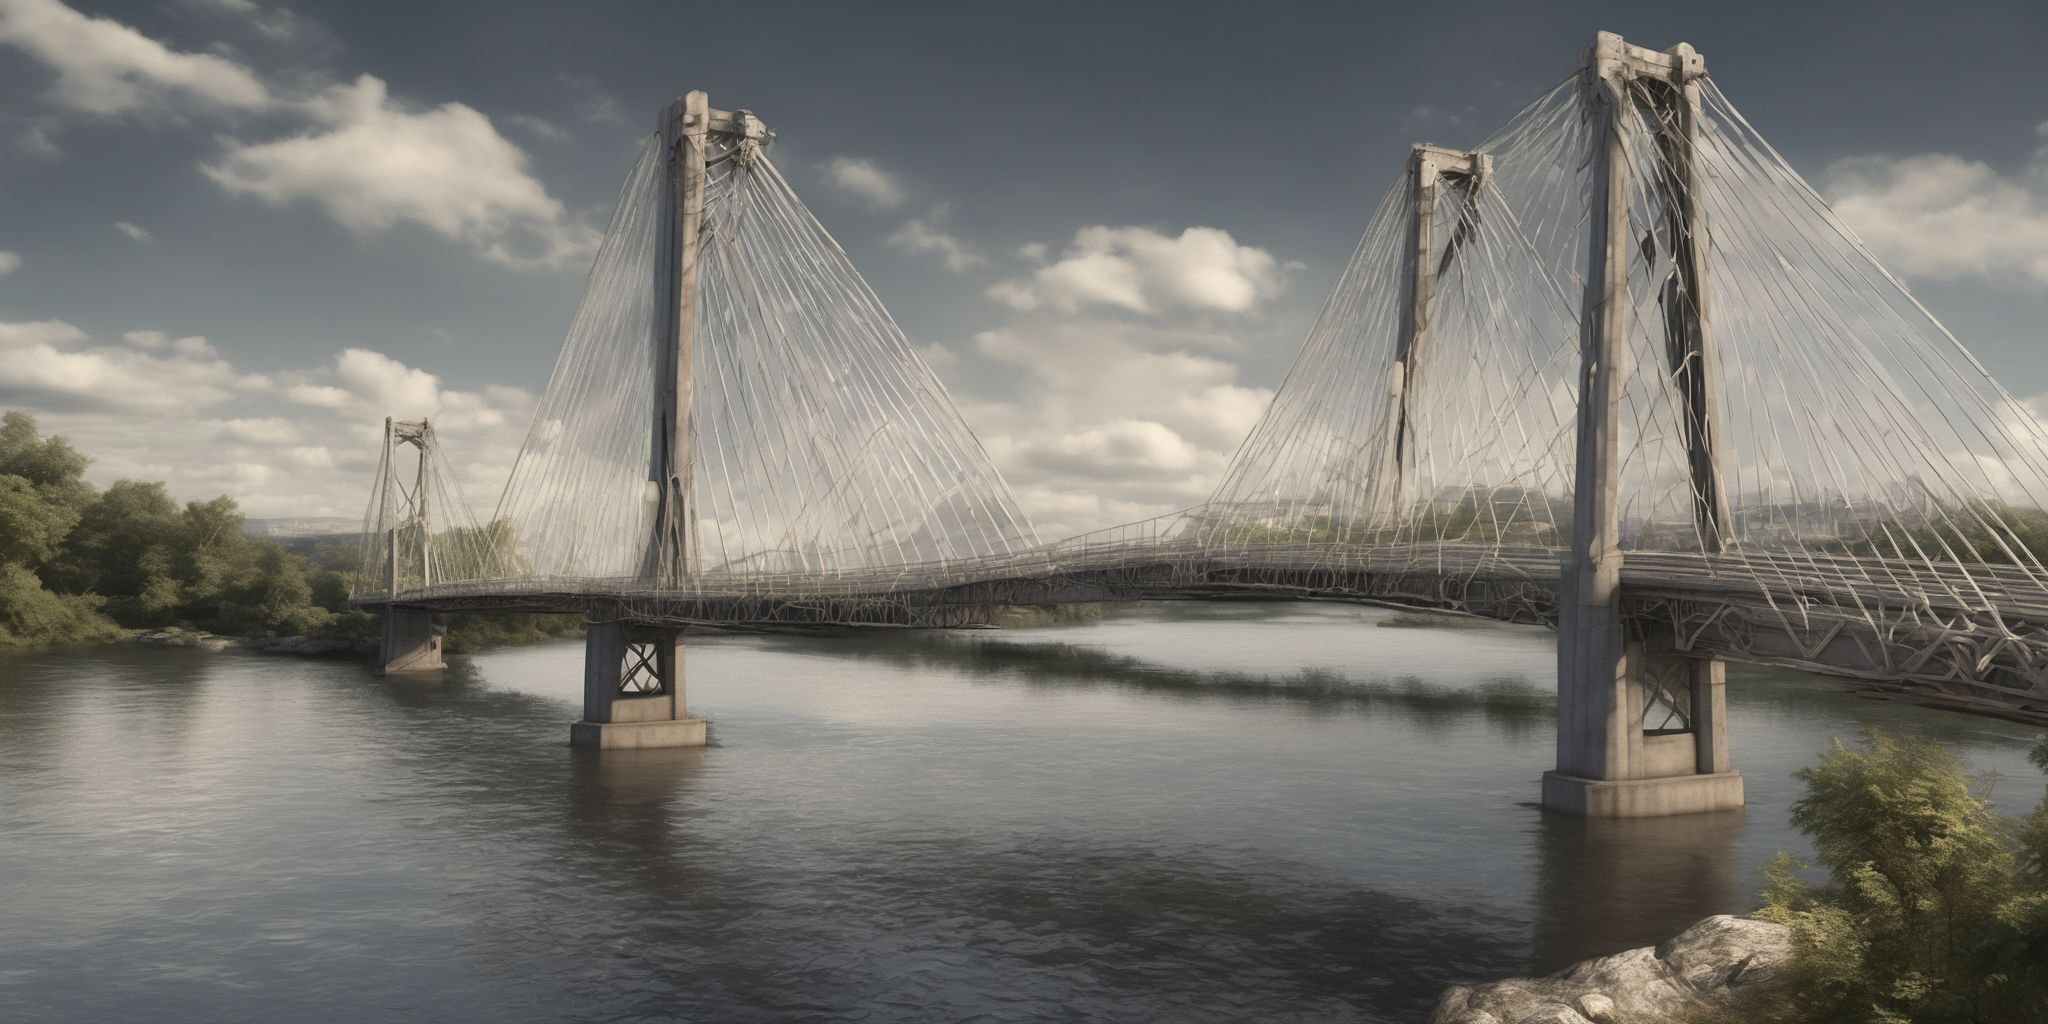 Bridge  in realistic, photographic style